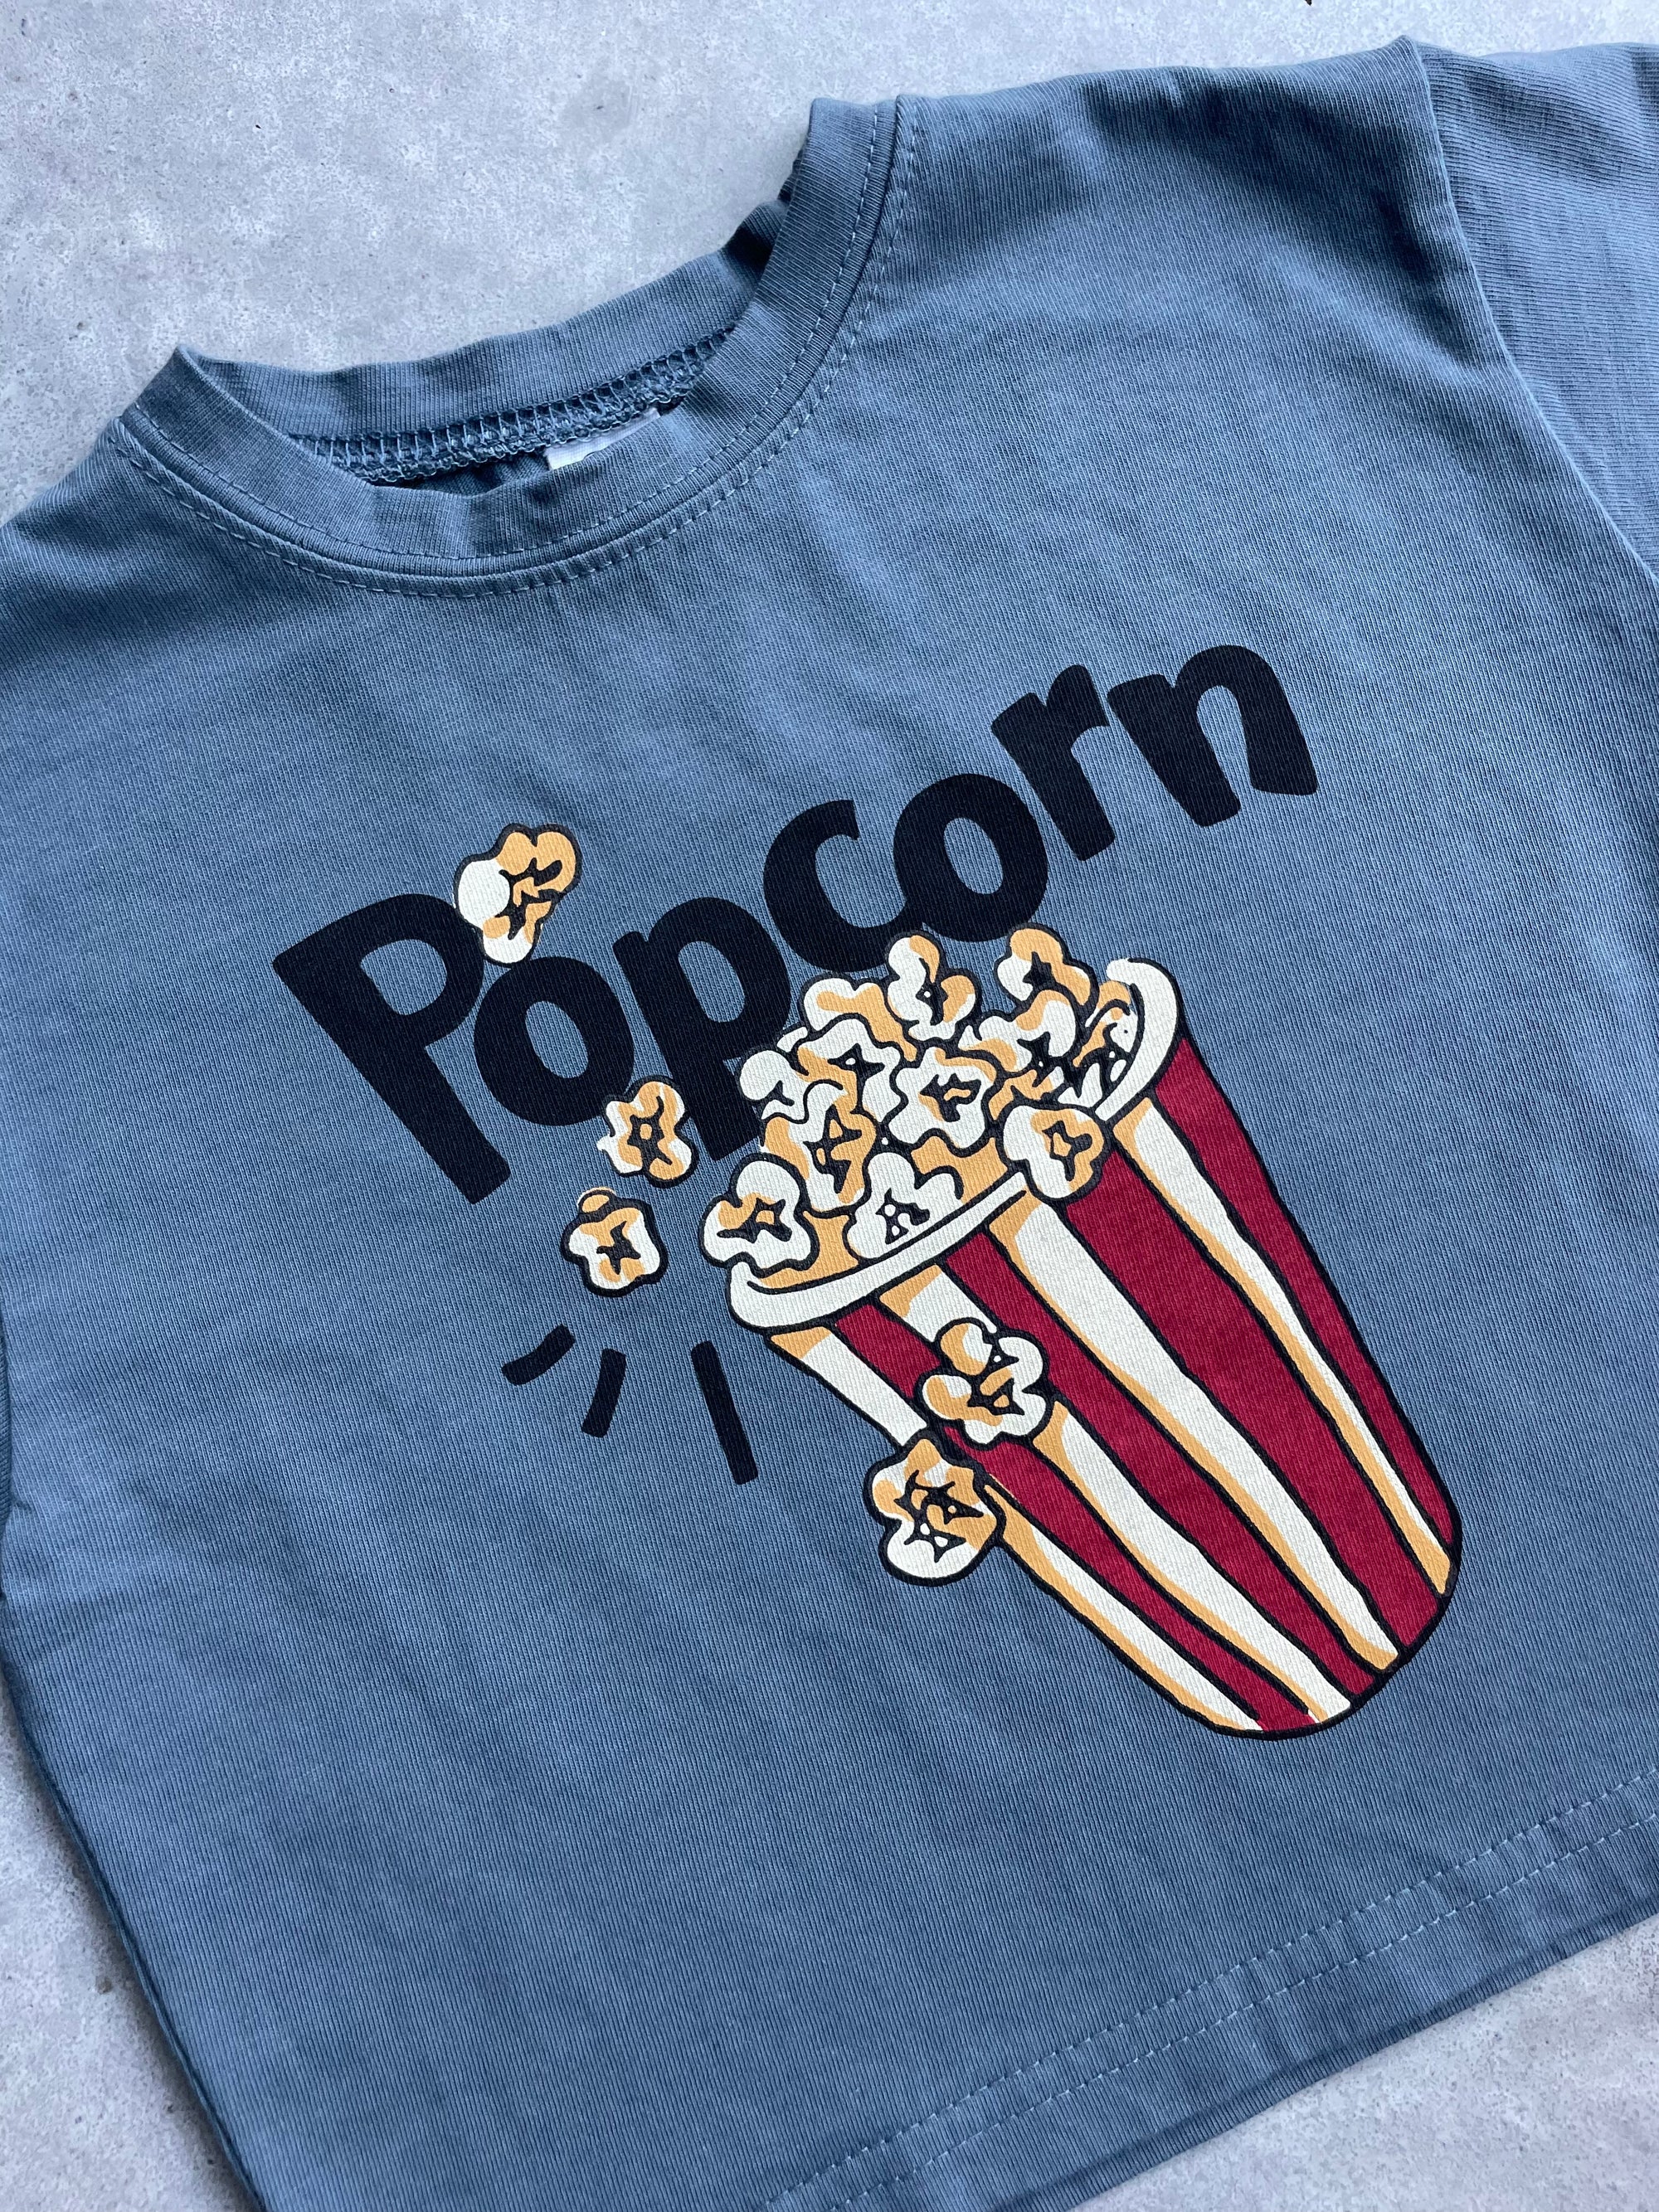 Popcorn tee